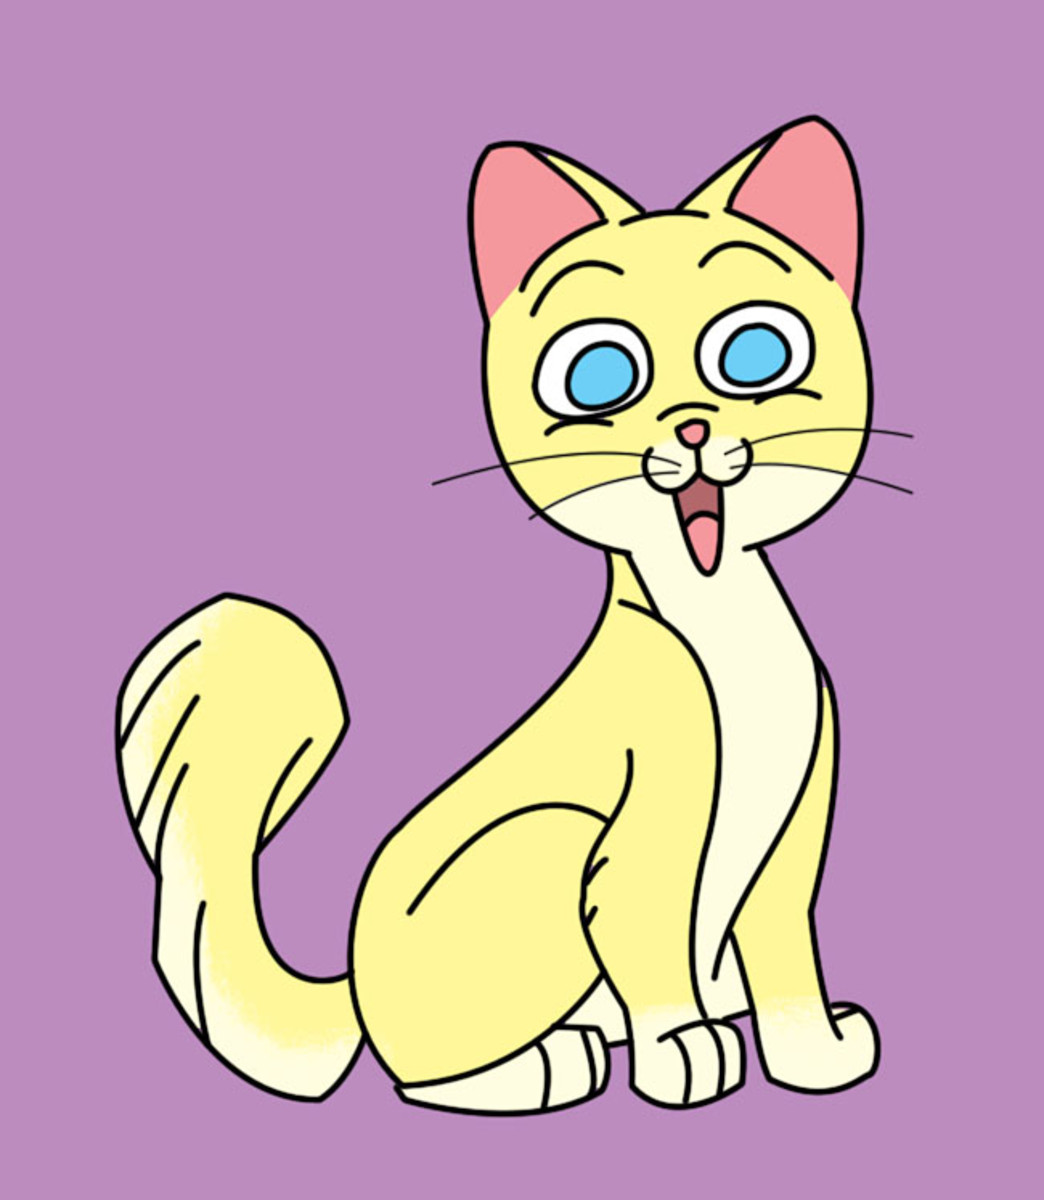 Drawing a Cartoon Cat - FeltMagnet